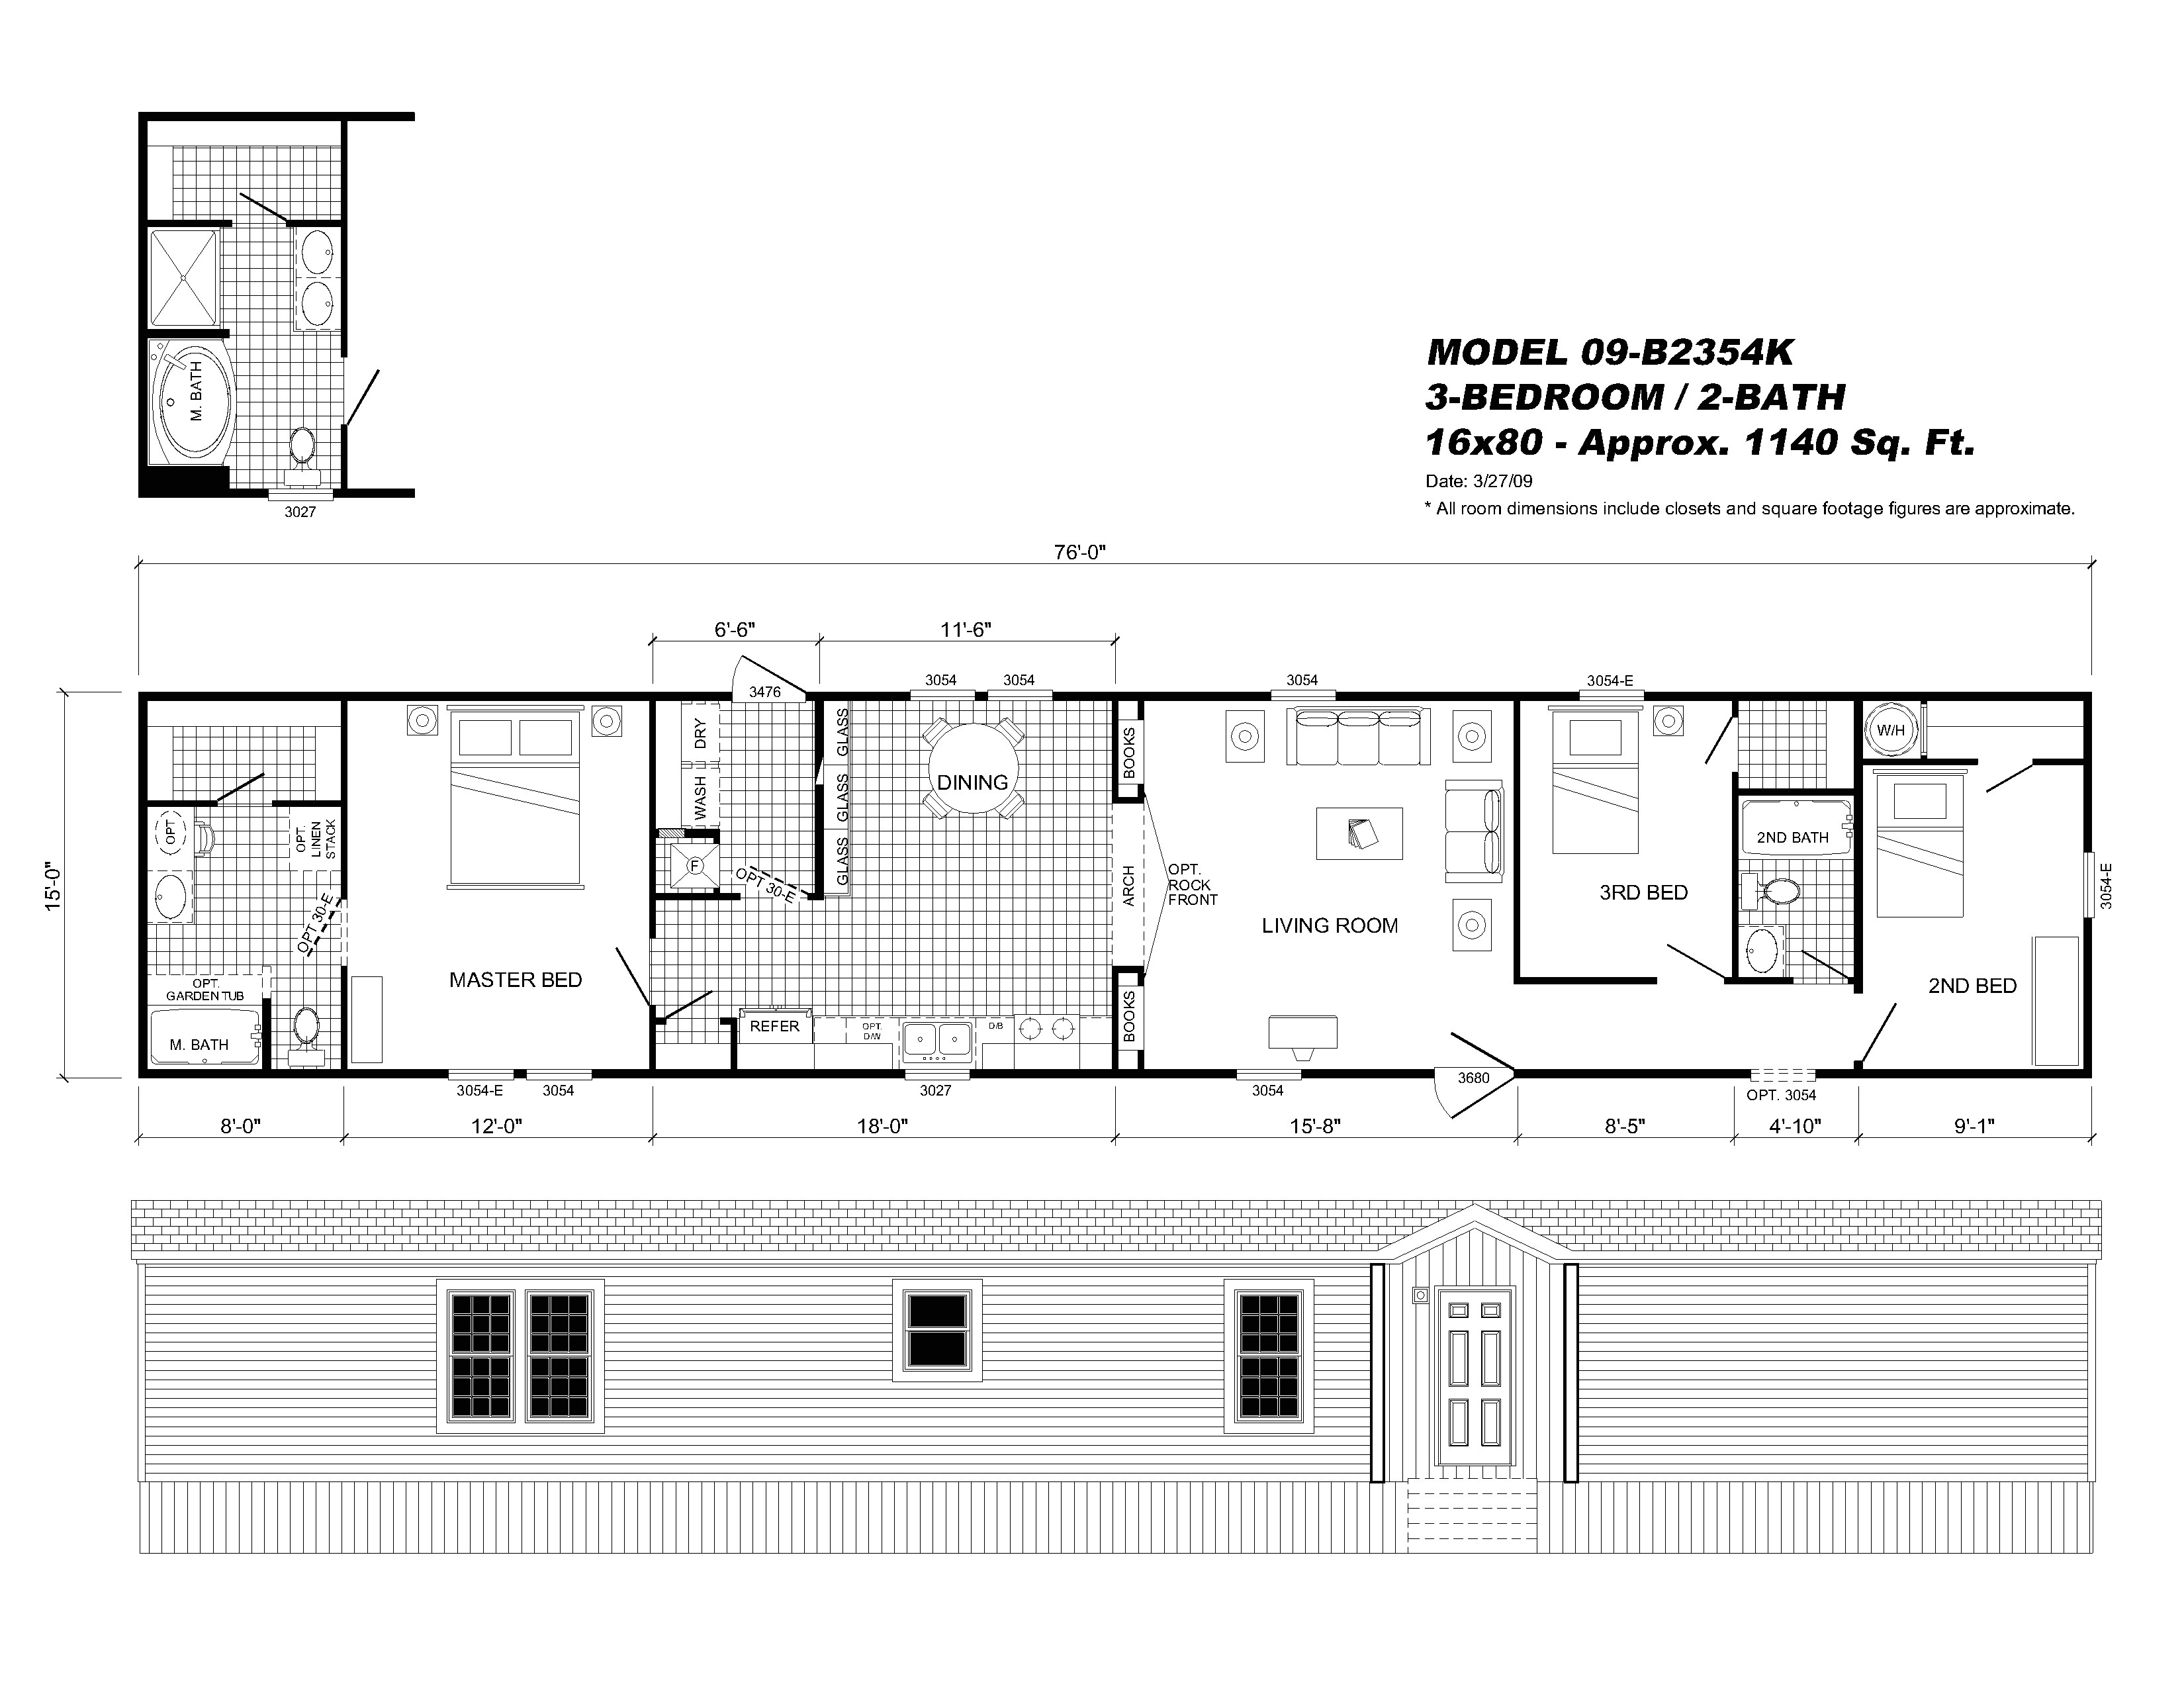 2001 Redman Mobile Home Floor Plans | plougonver.com